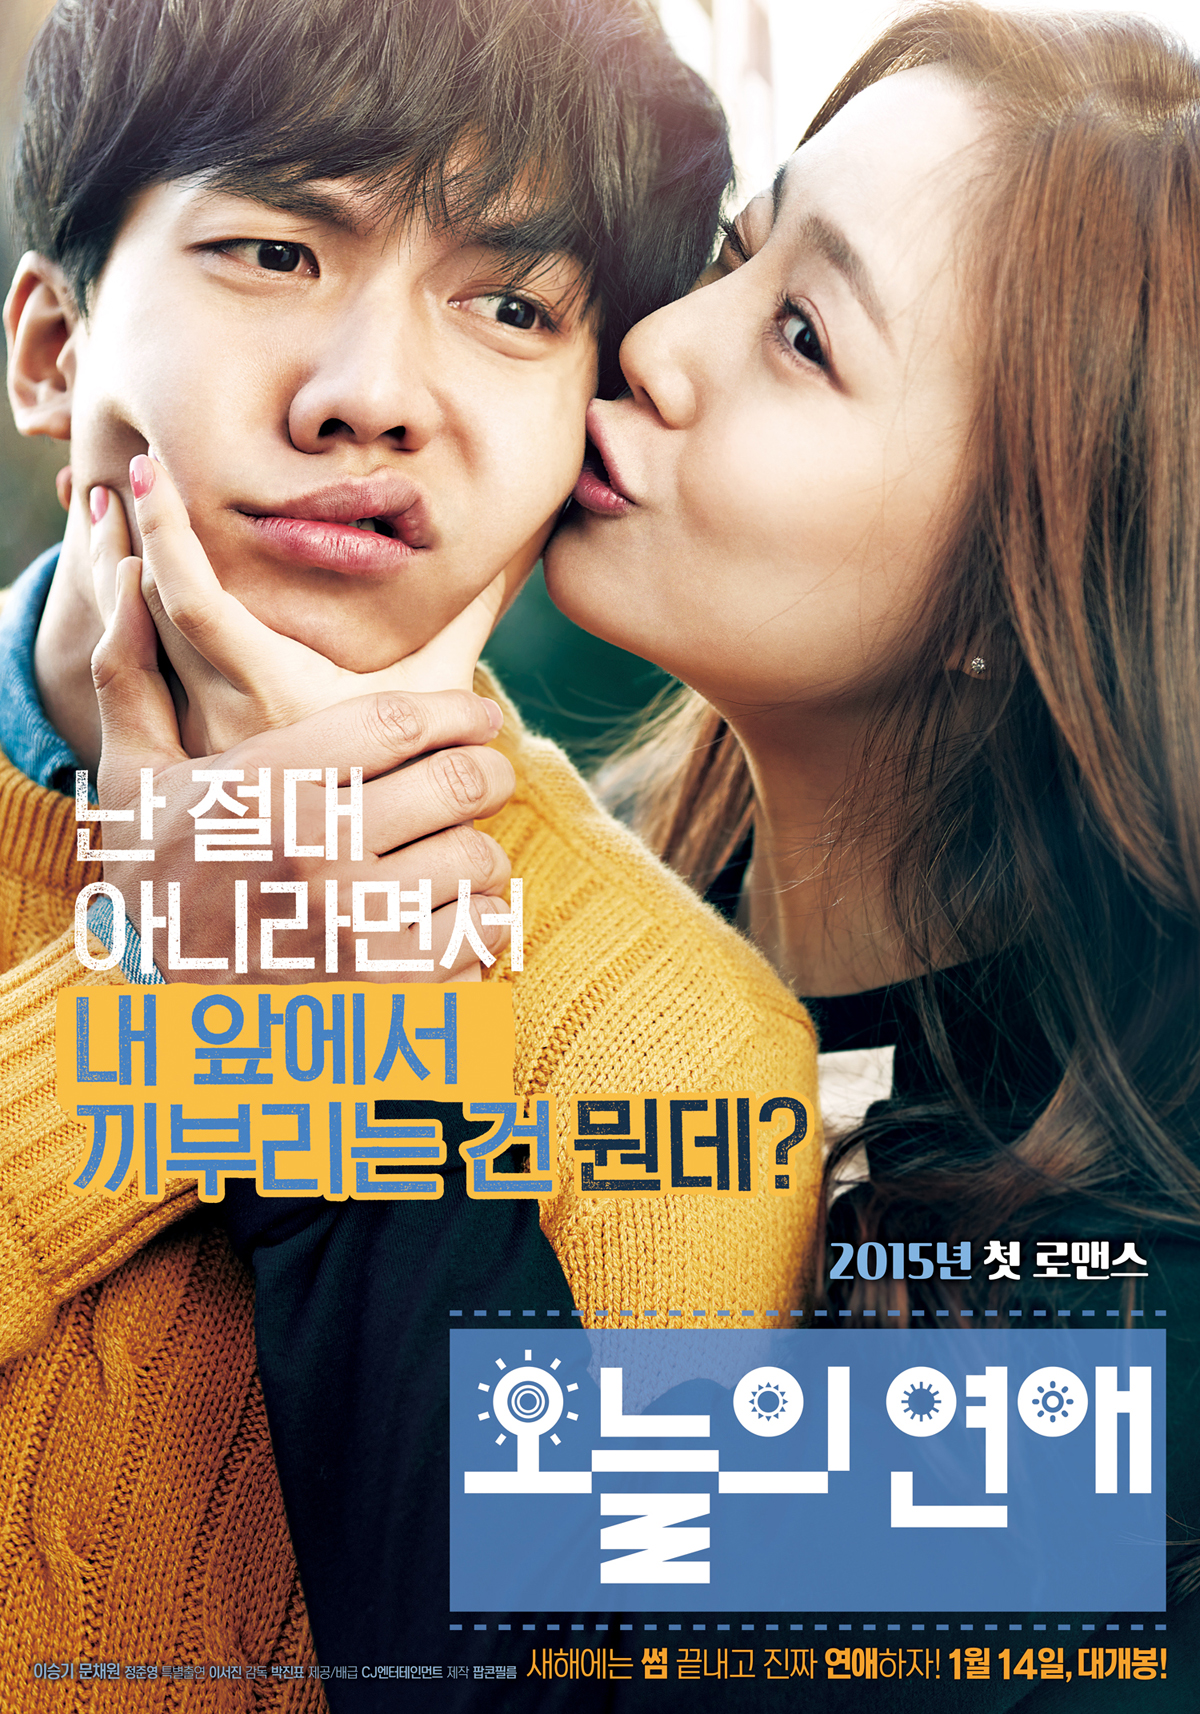 15 Must-See Romantic Korean Movies | Soompi